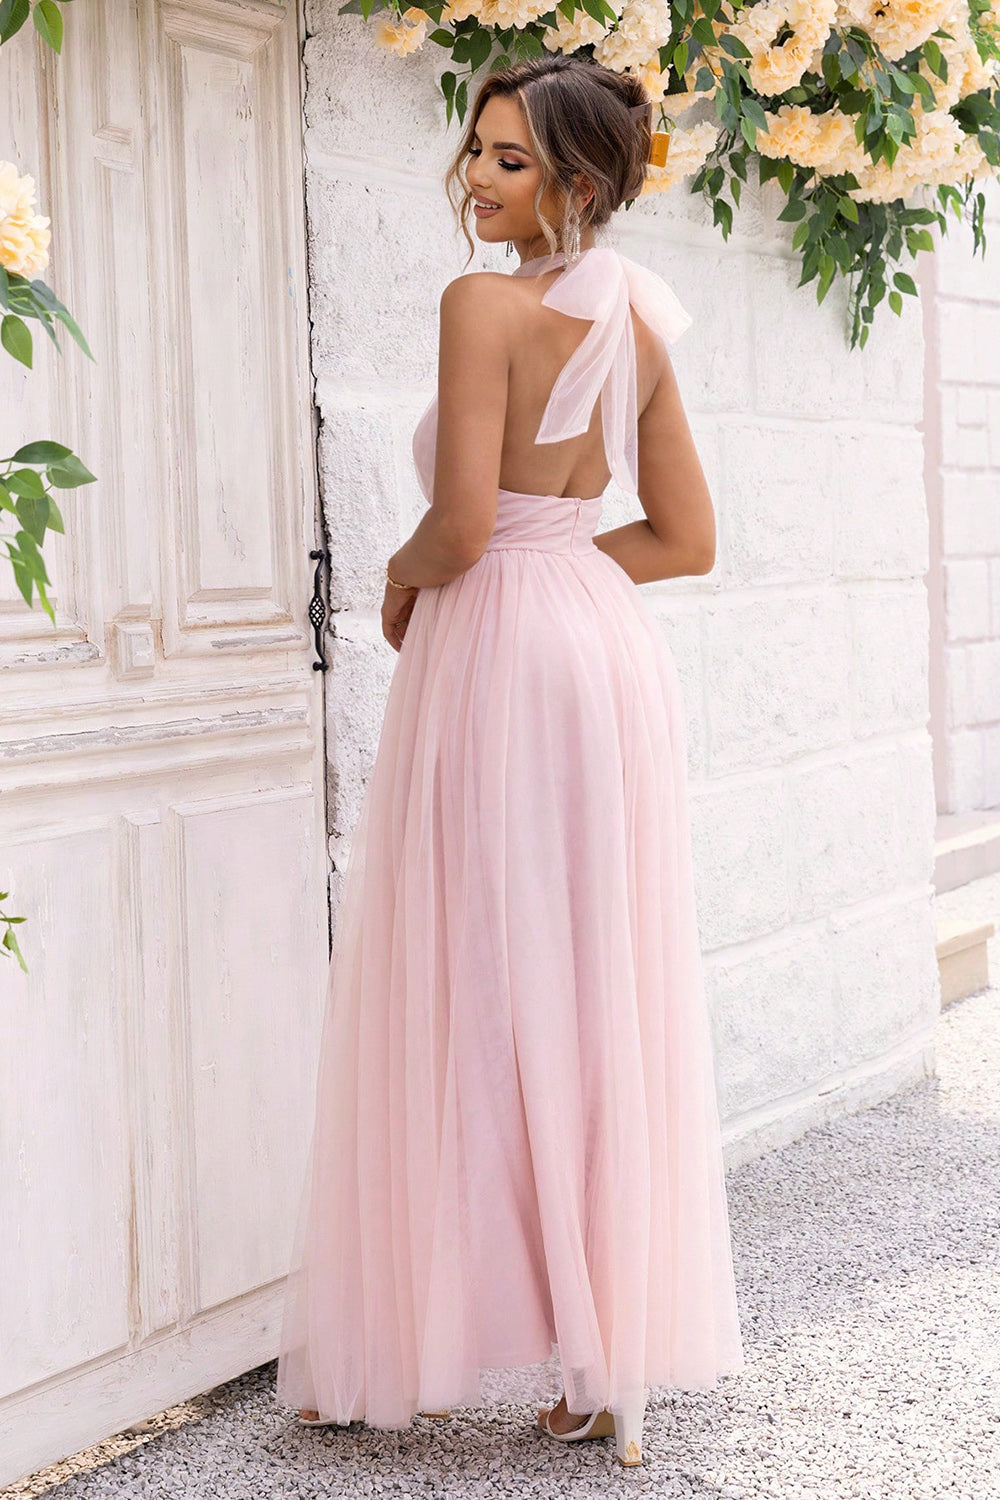 Elegant Halter Neck Backless Mesh Dress for Black Tie Summer Weddings - Perfect Wedding Guest Attire for an Elegant Evening Look